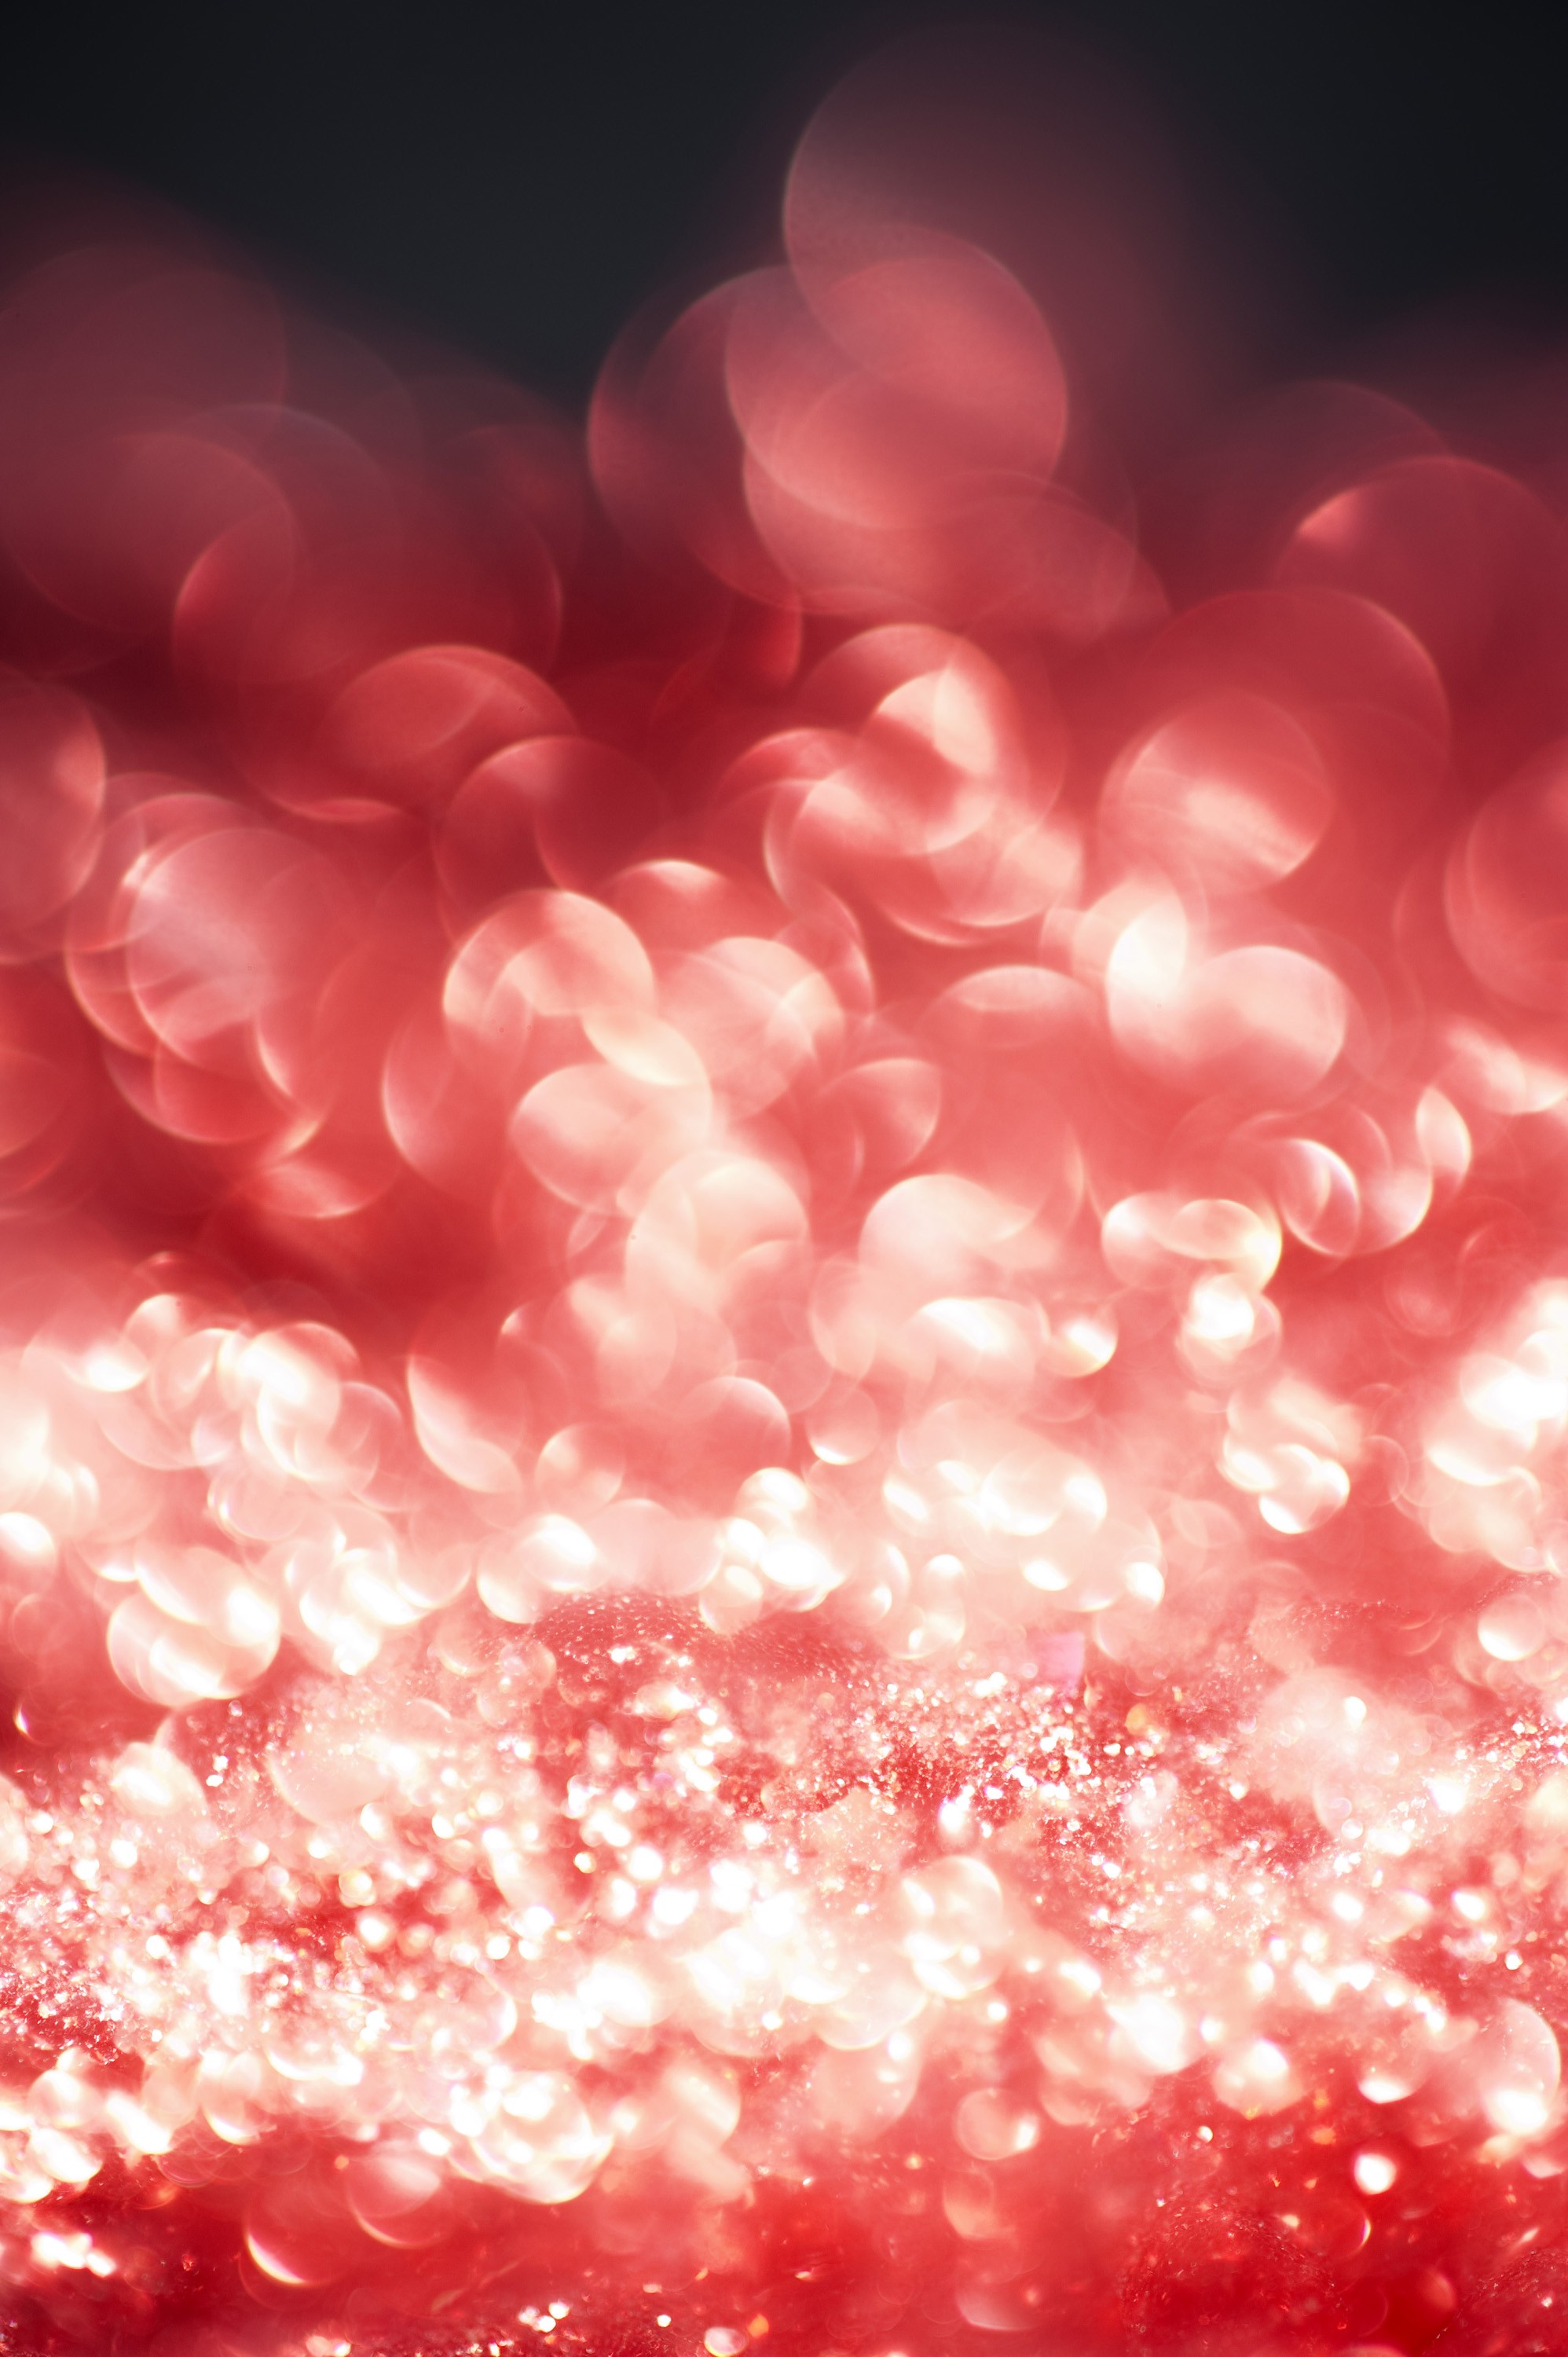 Red Glitter background ·① Download free backgrounds for desktop, mobile